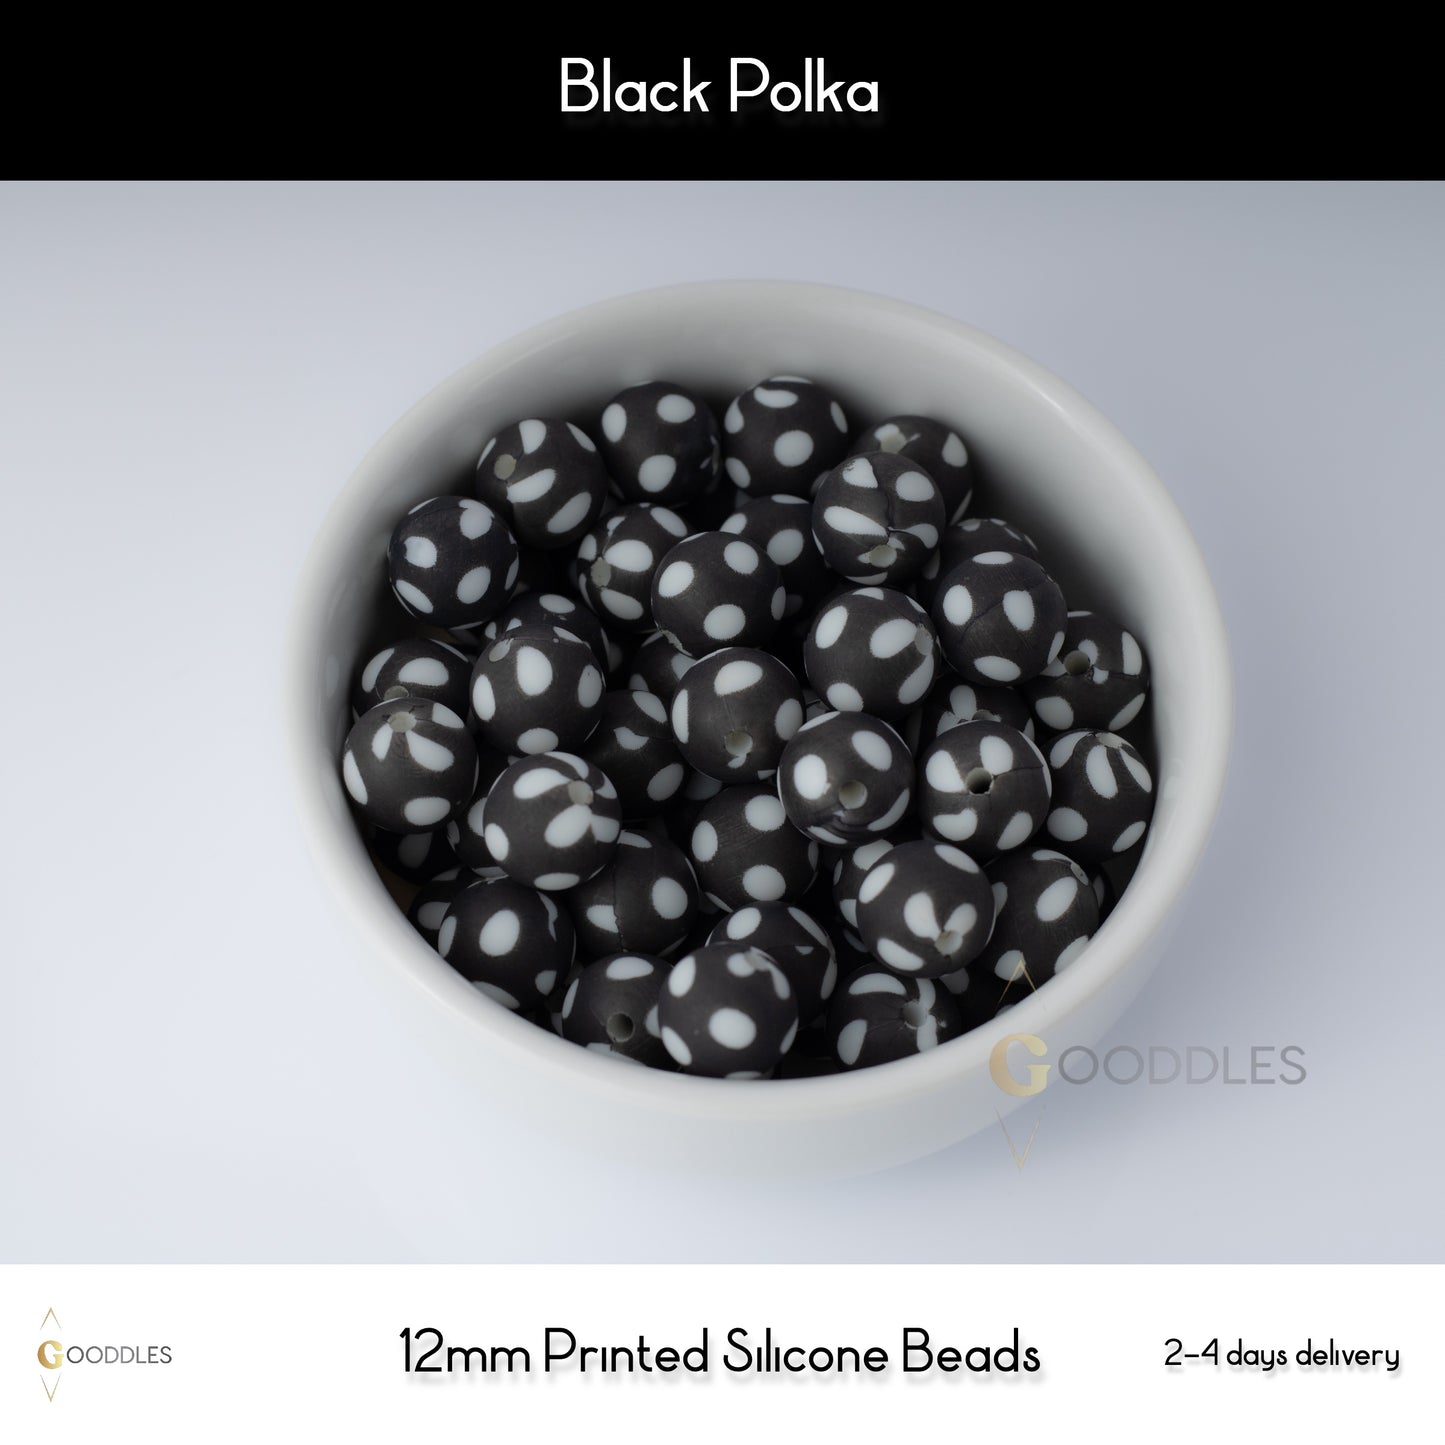 5pcs, Black Polka Silicone Beads Printed Round Silicone Beads